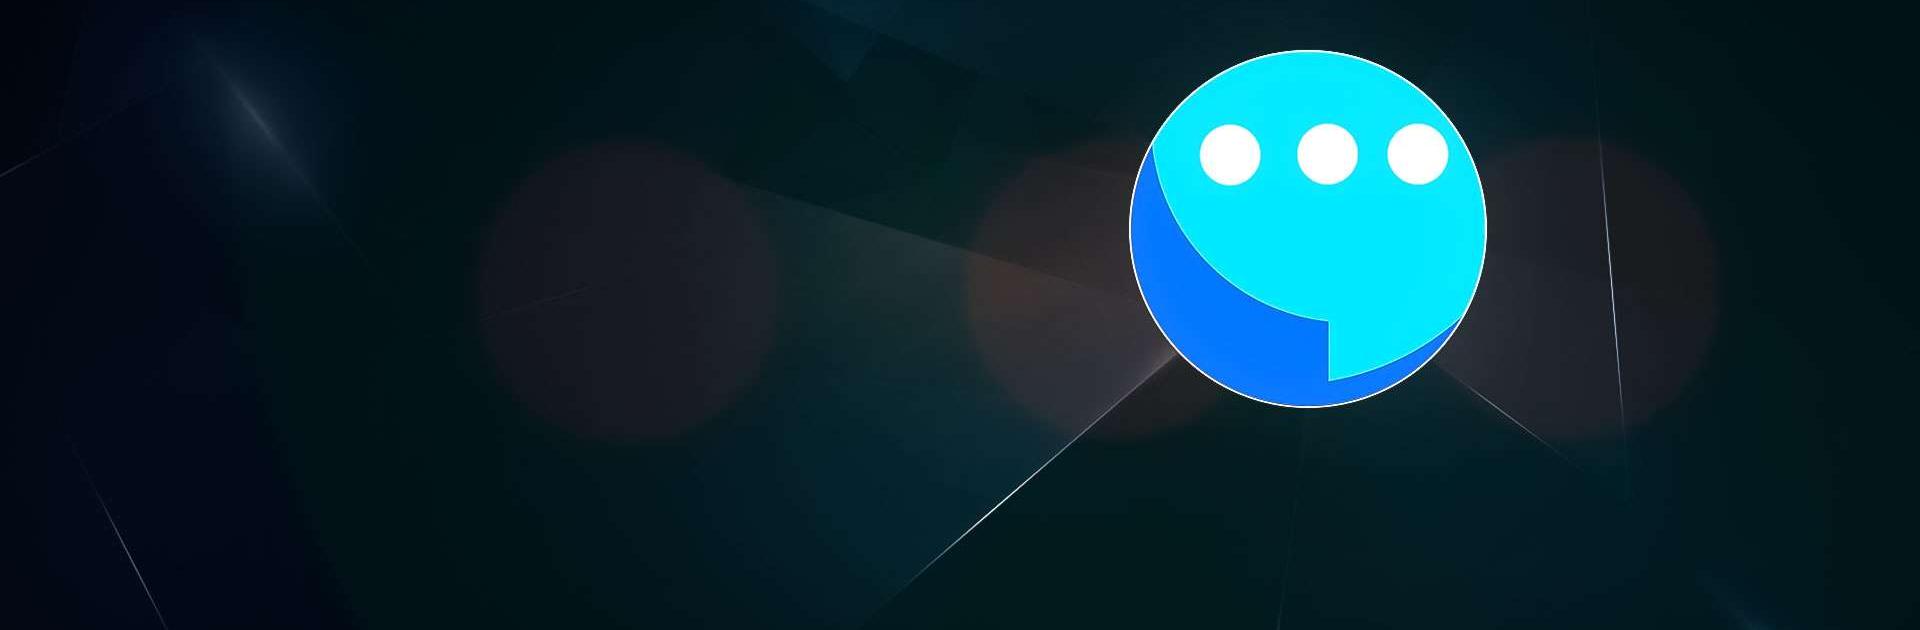 VK Messenger: Chats and calls